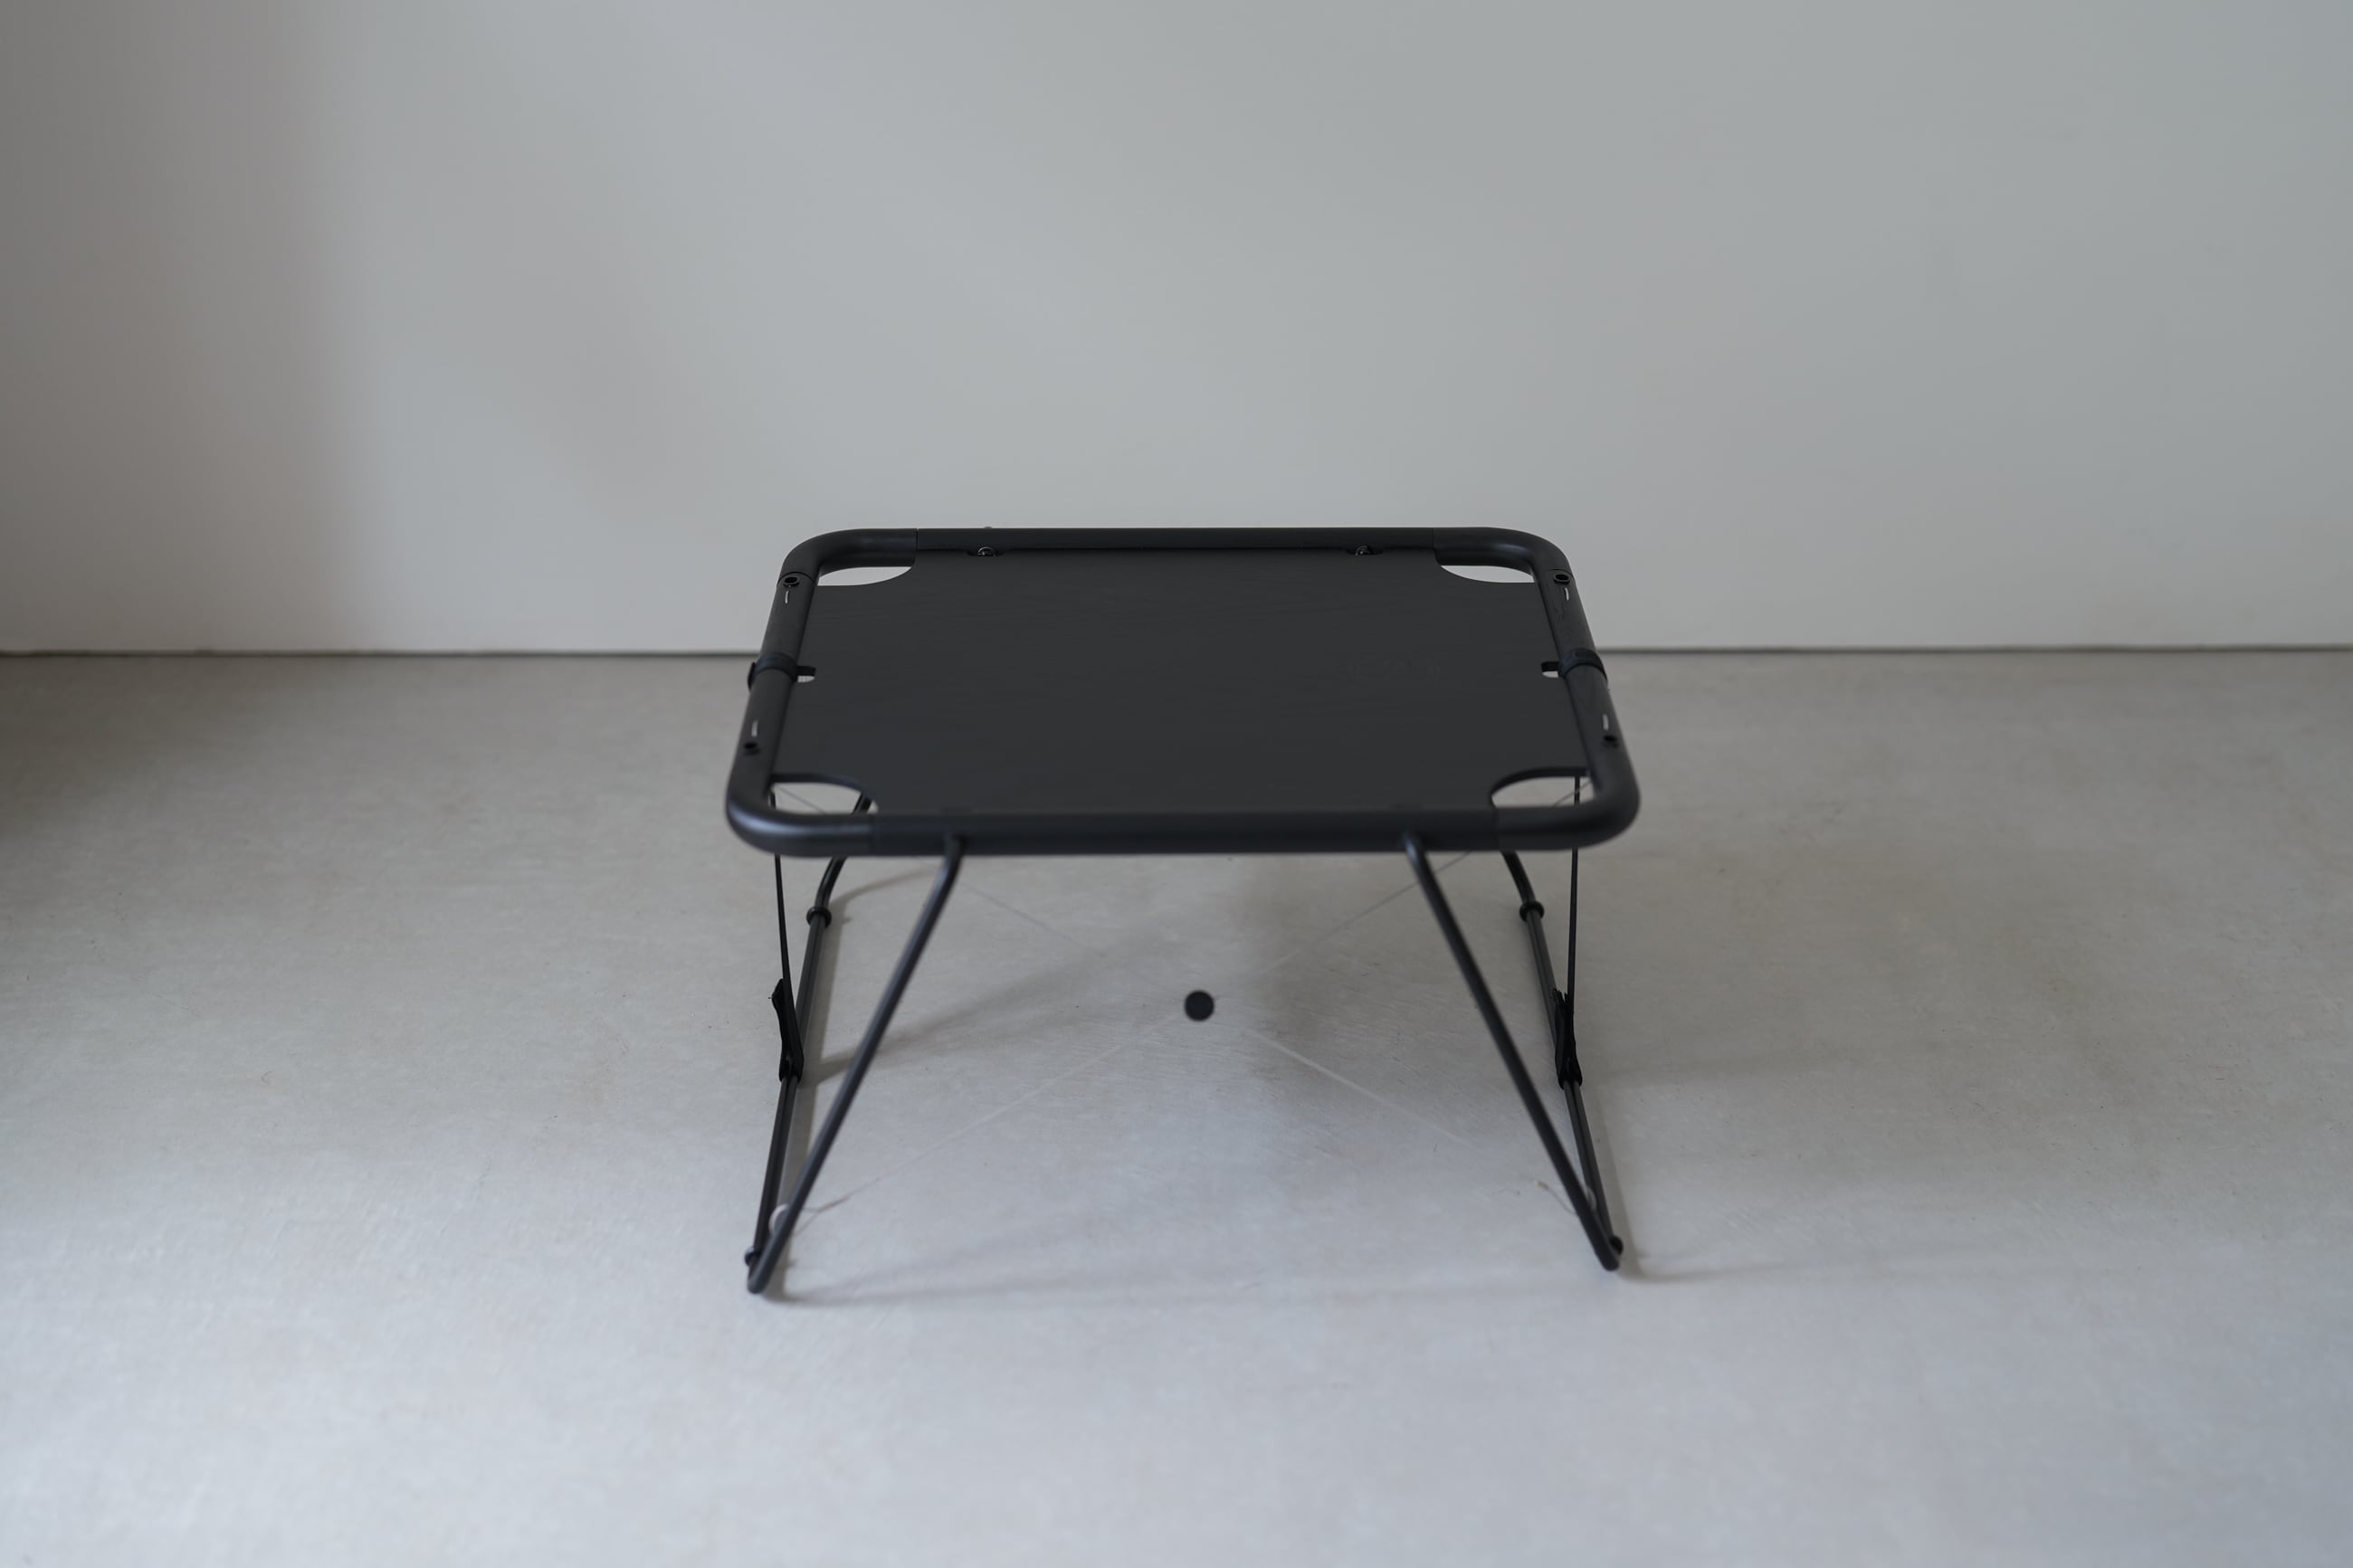 hxo Table Mini All Black AL. Edition | hxo design jp powered by BASE